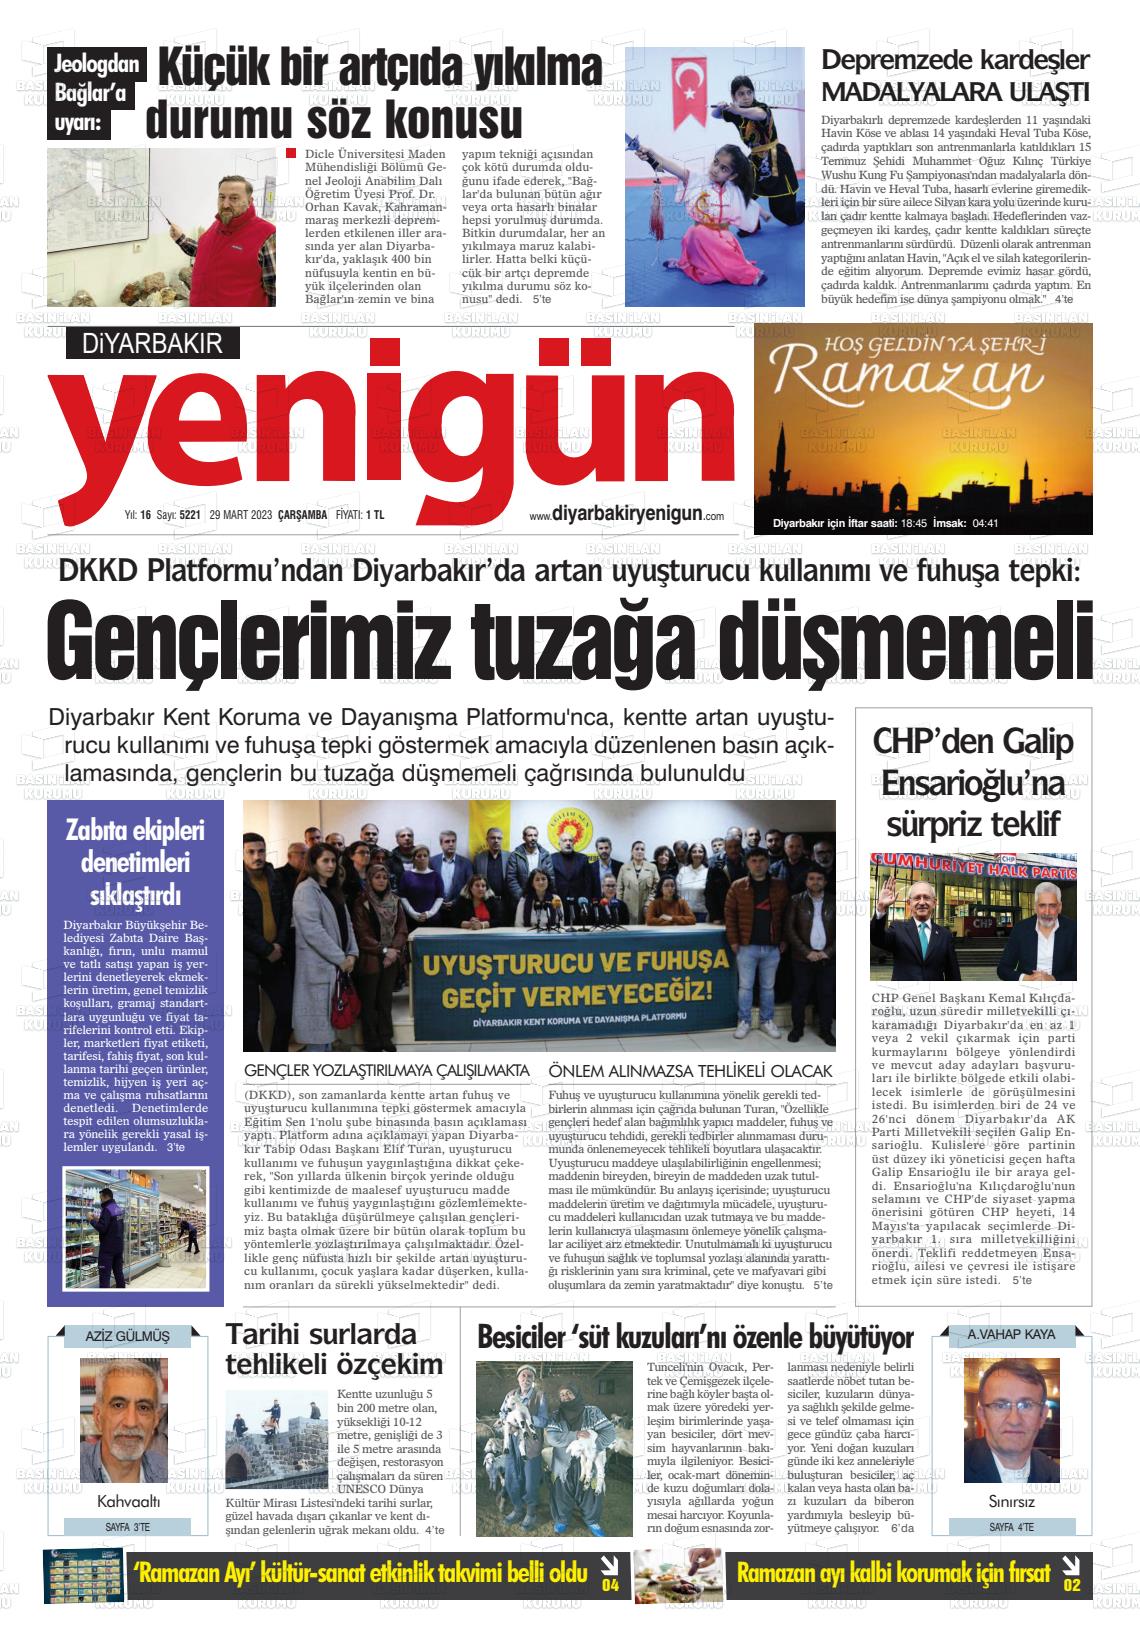 29 Mart 2023 Diyarbakır Yenigün Gazete Manşeti